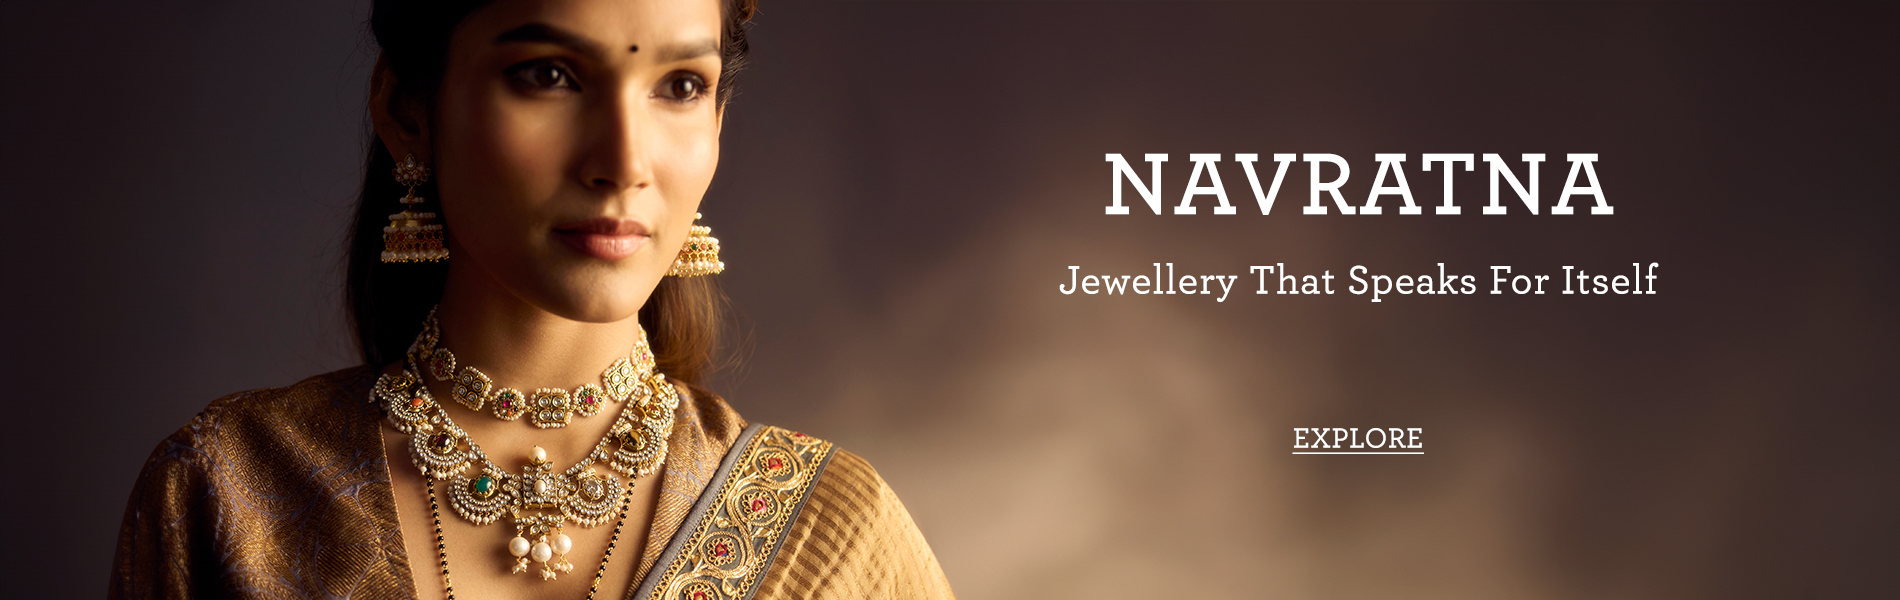 Benefits of wearing Navaratna Jewellery | Zaamor Diamonds Blog